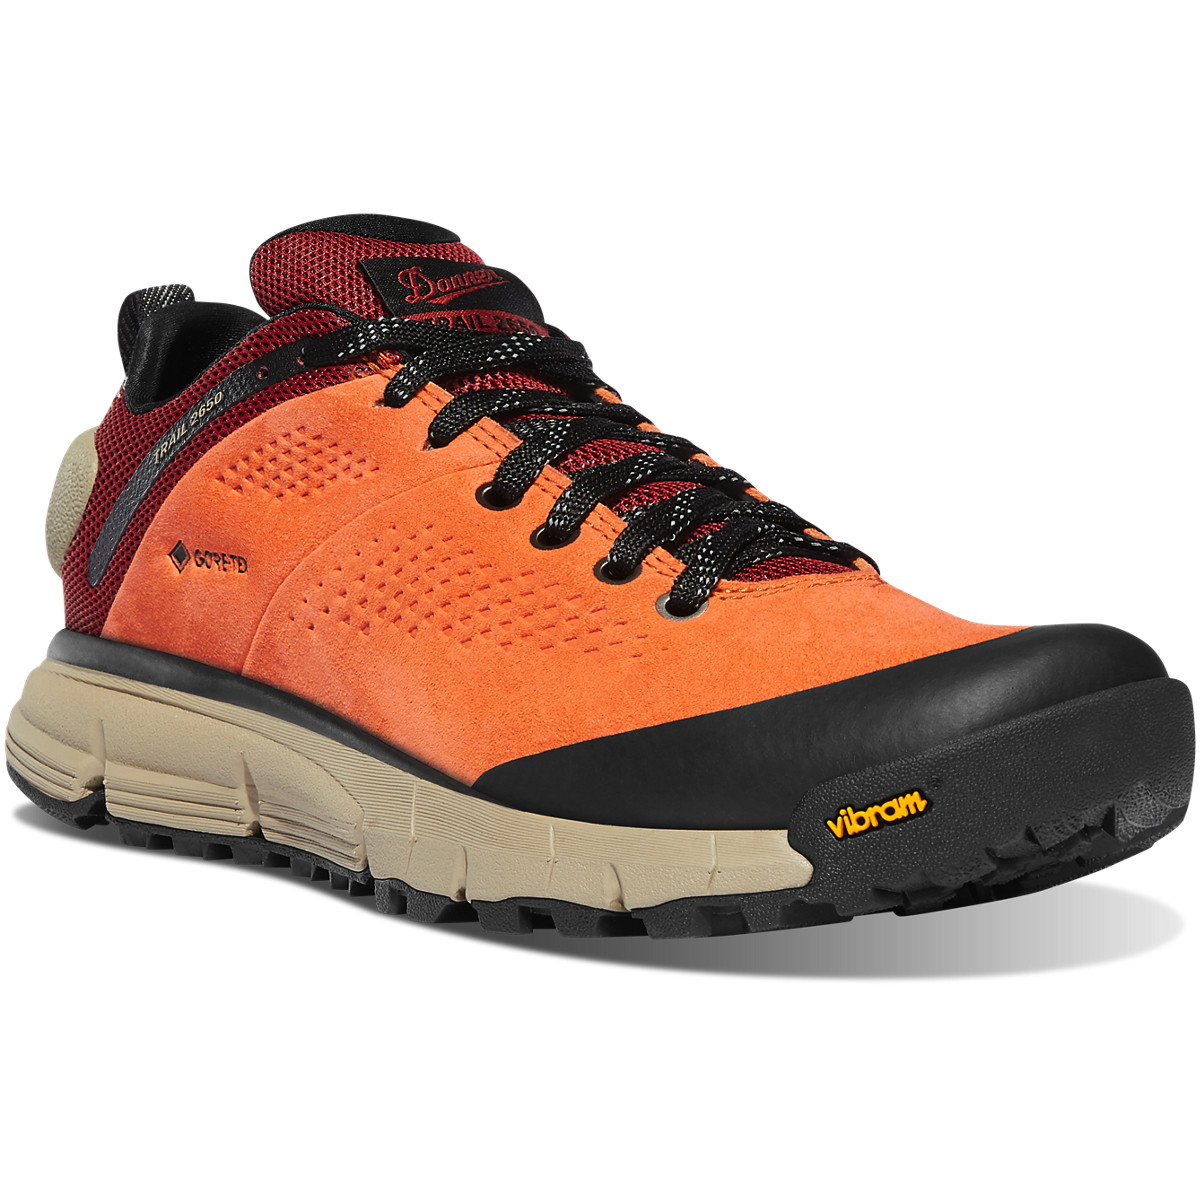 Danner Trail 2650 GTX - Chaussures Randonnée Orange - Femme ( France 05137CPMY )